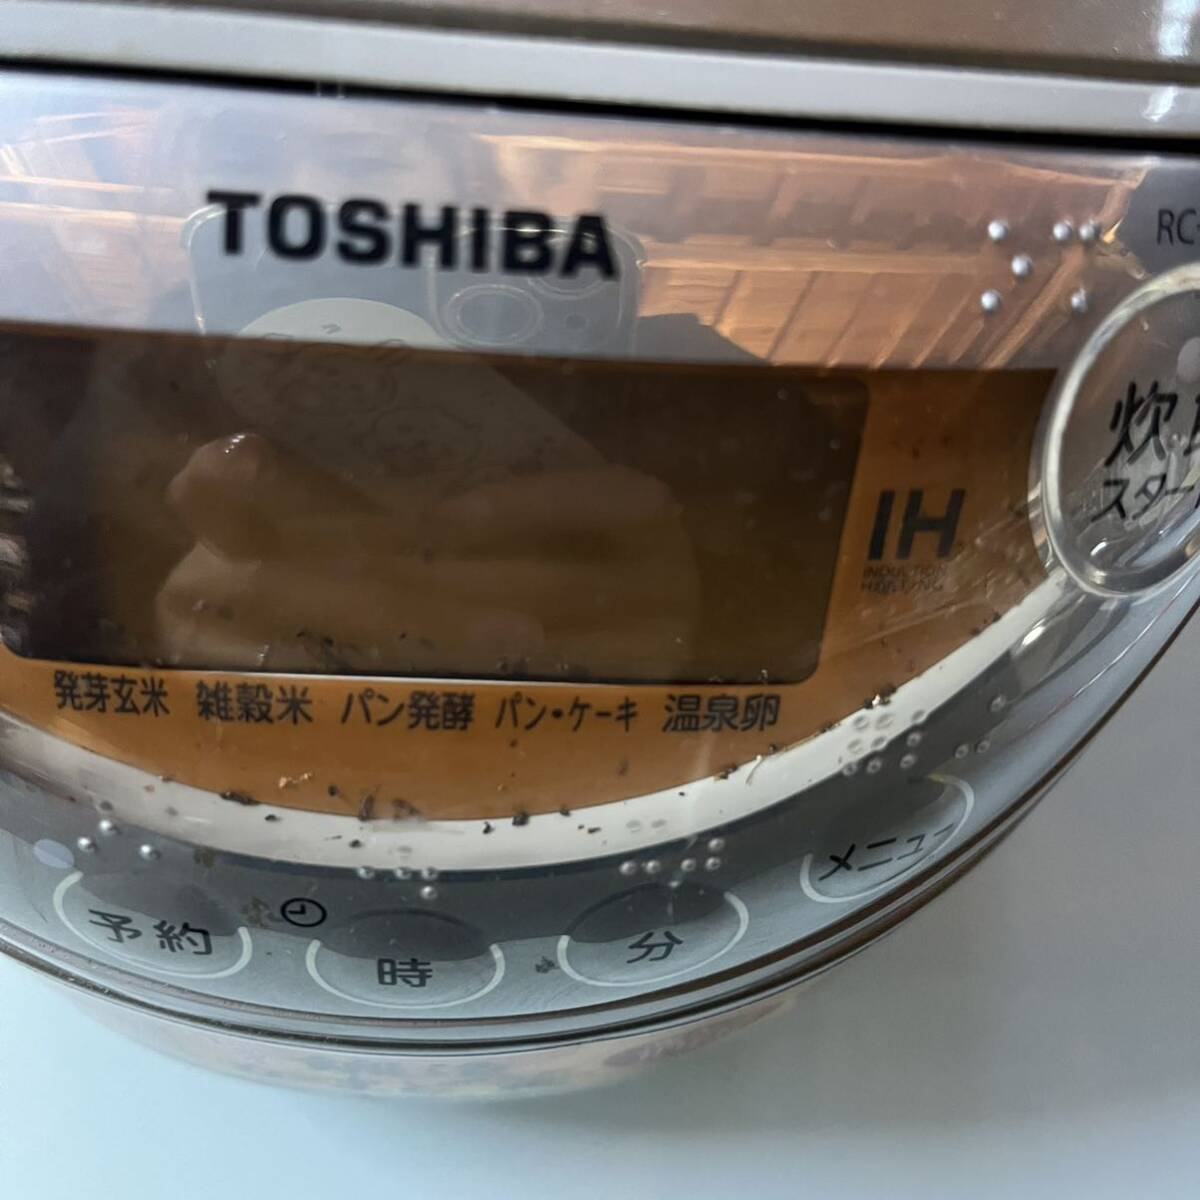 TOSHIBA 東芝 RC-6XH 3.5合炊き IH炊飯ジャー 炊飯器 中古品 Yの画像2